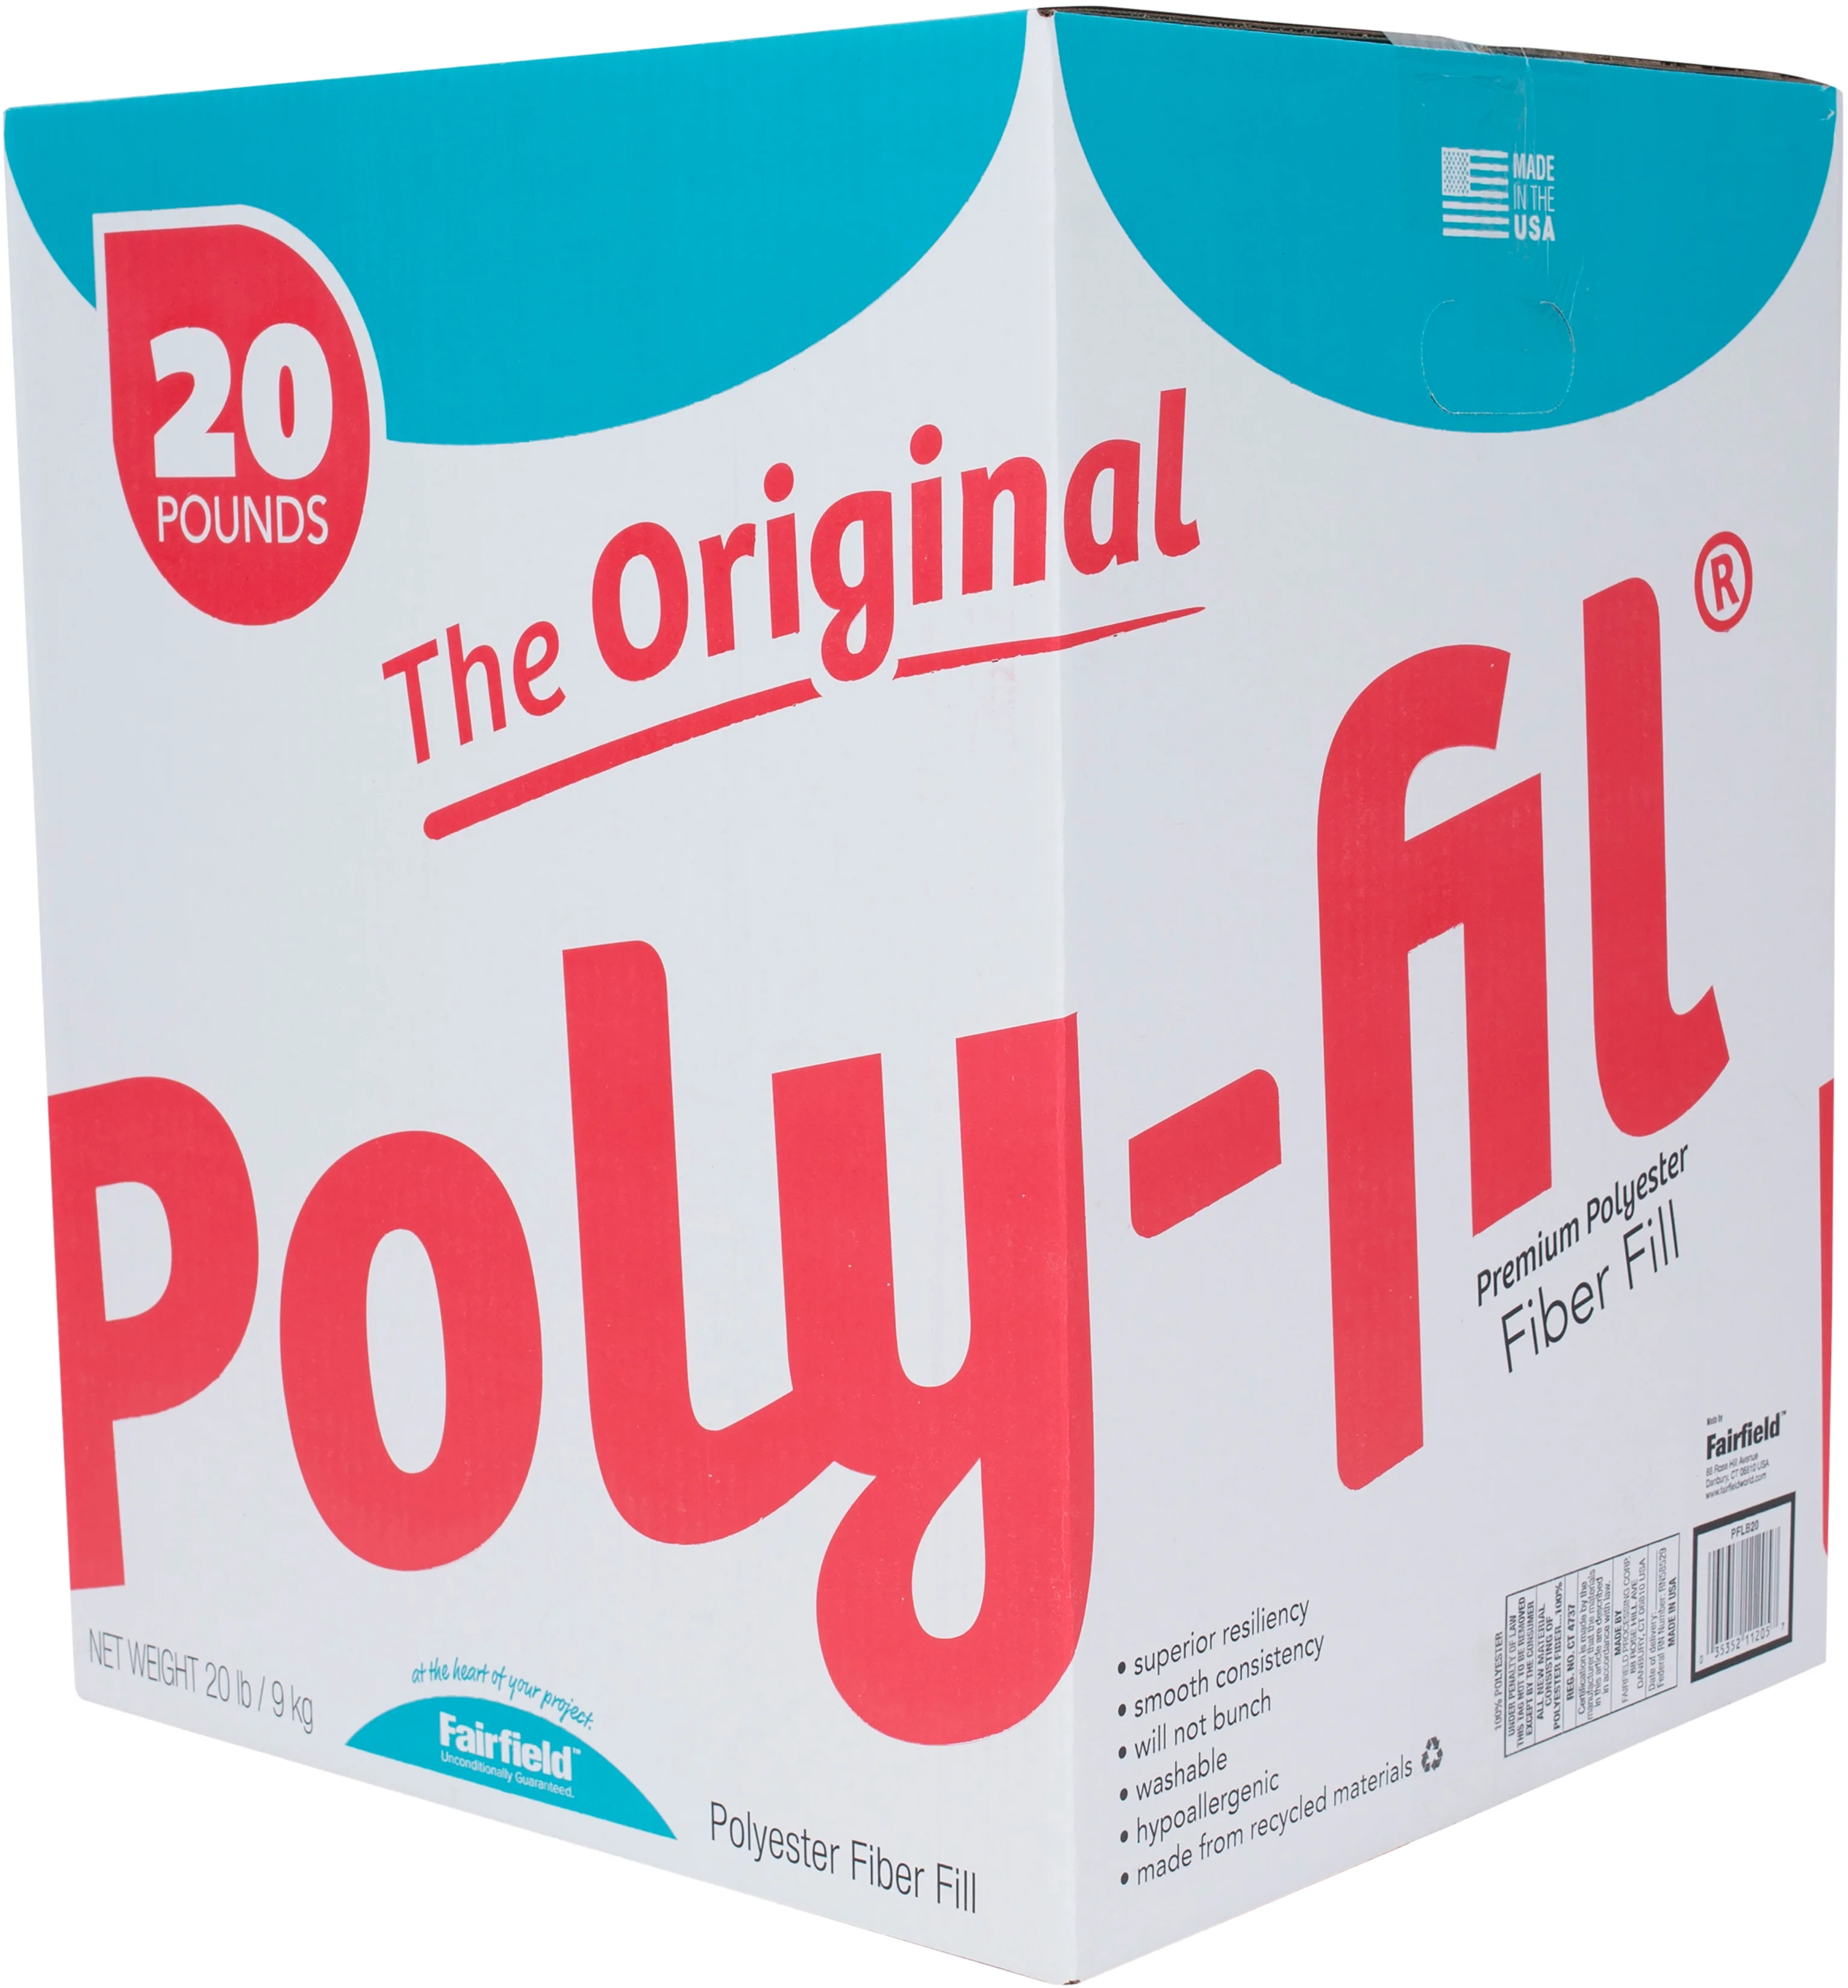 Poly-Fil® Premium Polyester Fiber Fill by Fairfield™, 50 oz bag